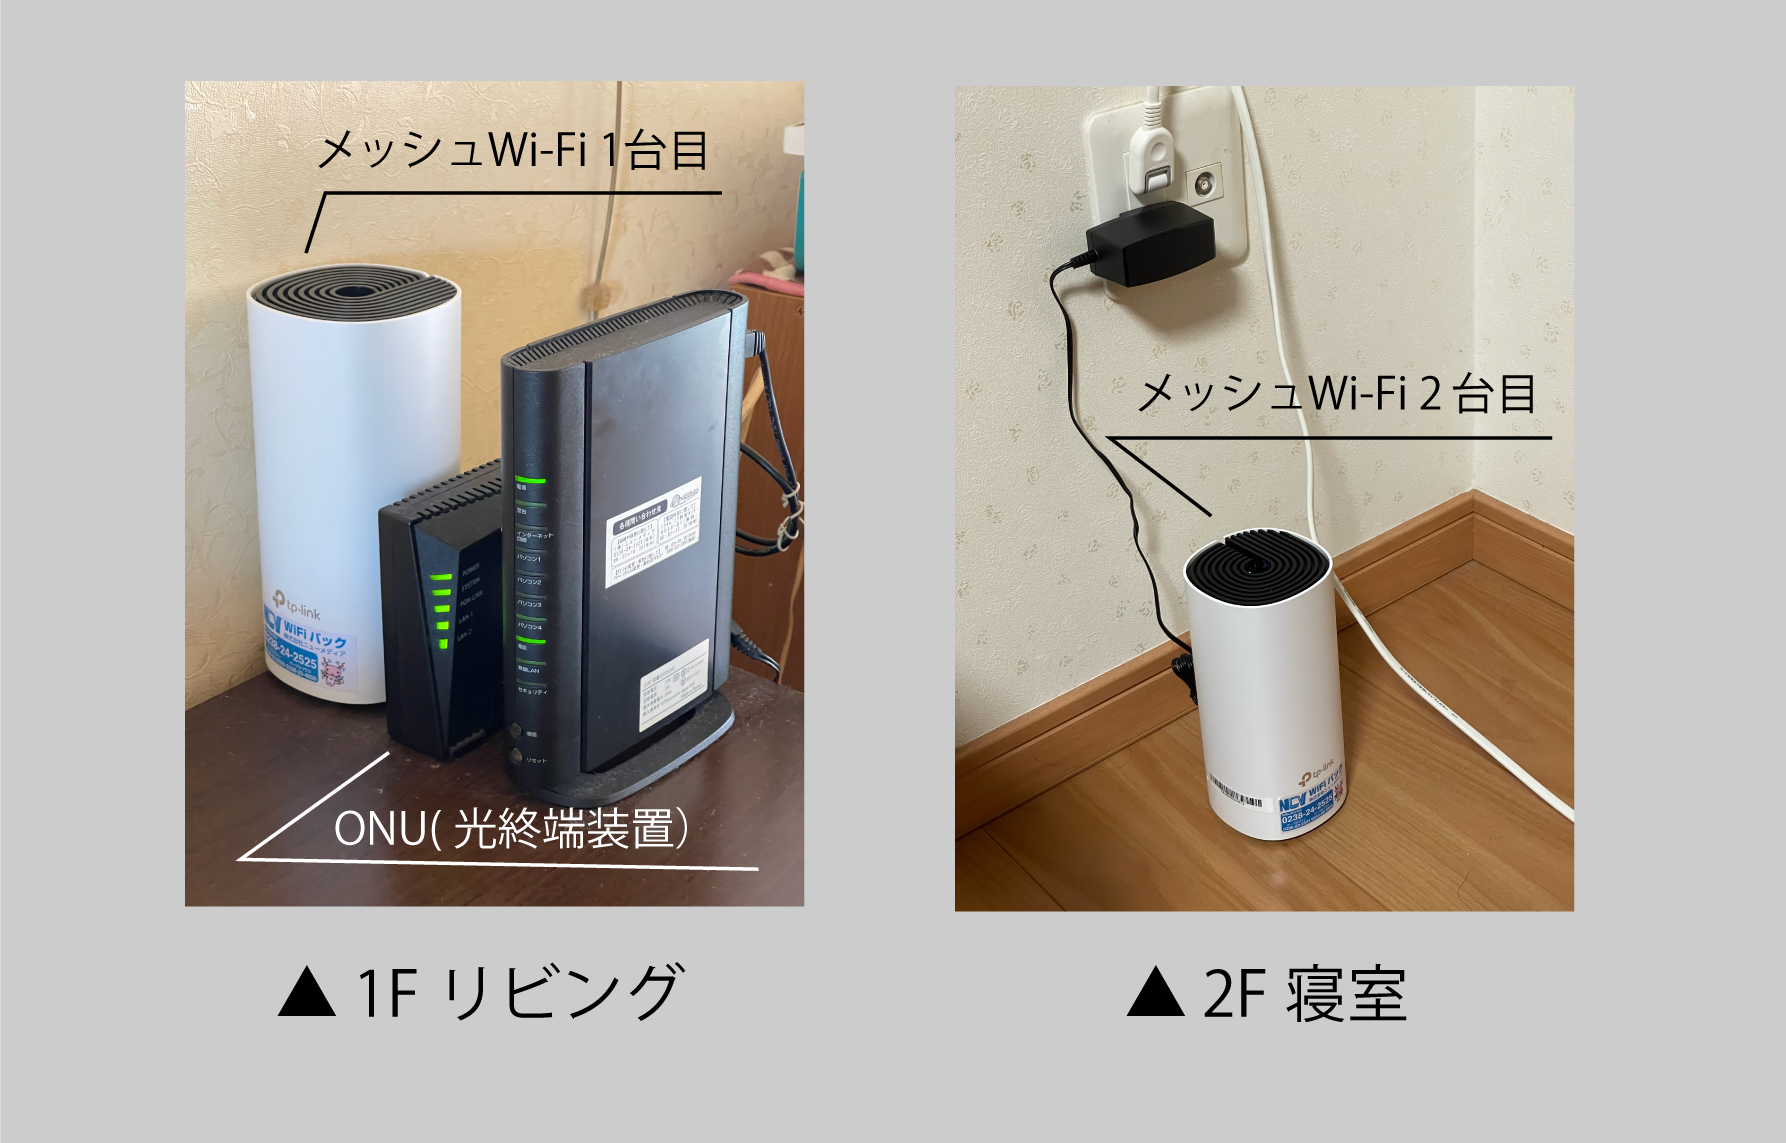 1FリビングのONU（光終端装置）の隣にメッシュWi-Fiの親機を設置。2F寝室に2台目のメッシュWi-Fiを設置しているイメージ図